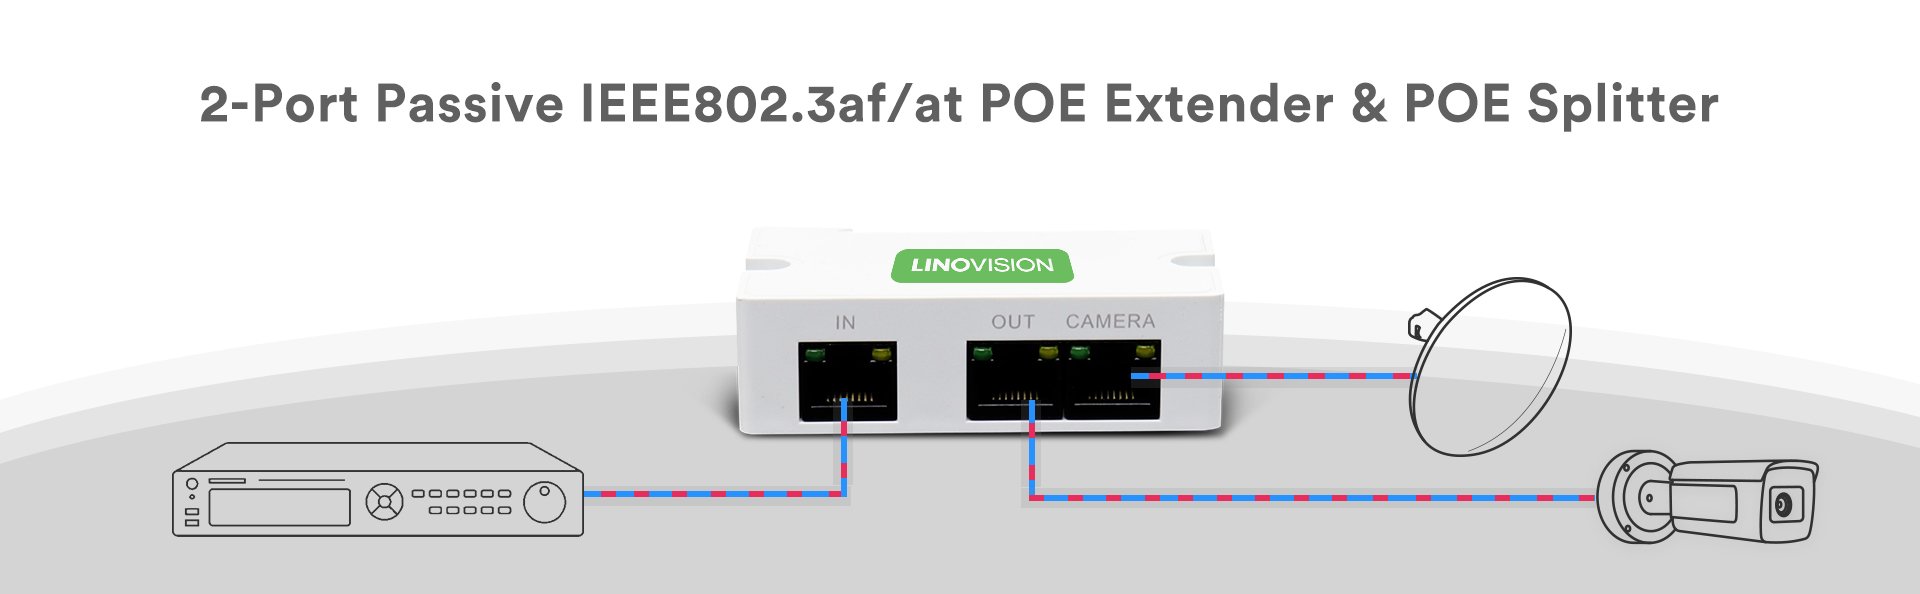 LINOVISION Mini Passive 2 Port POE Extender IEEE 802.3af/at POE